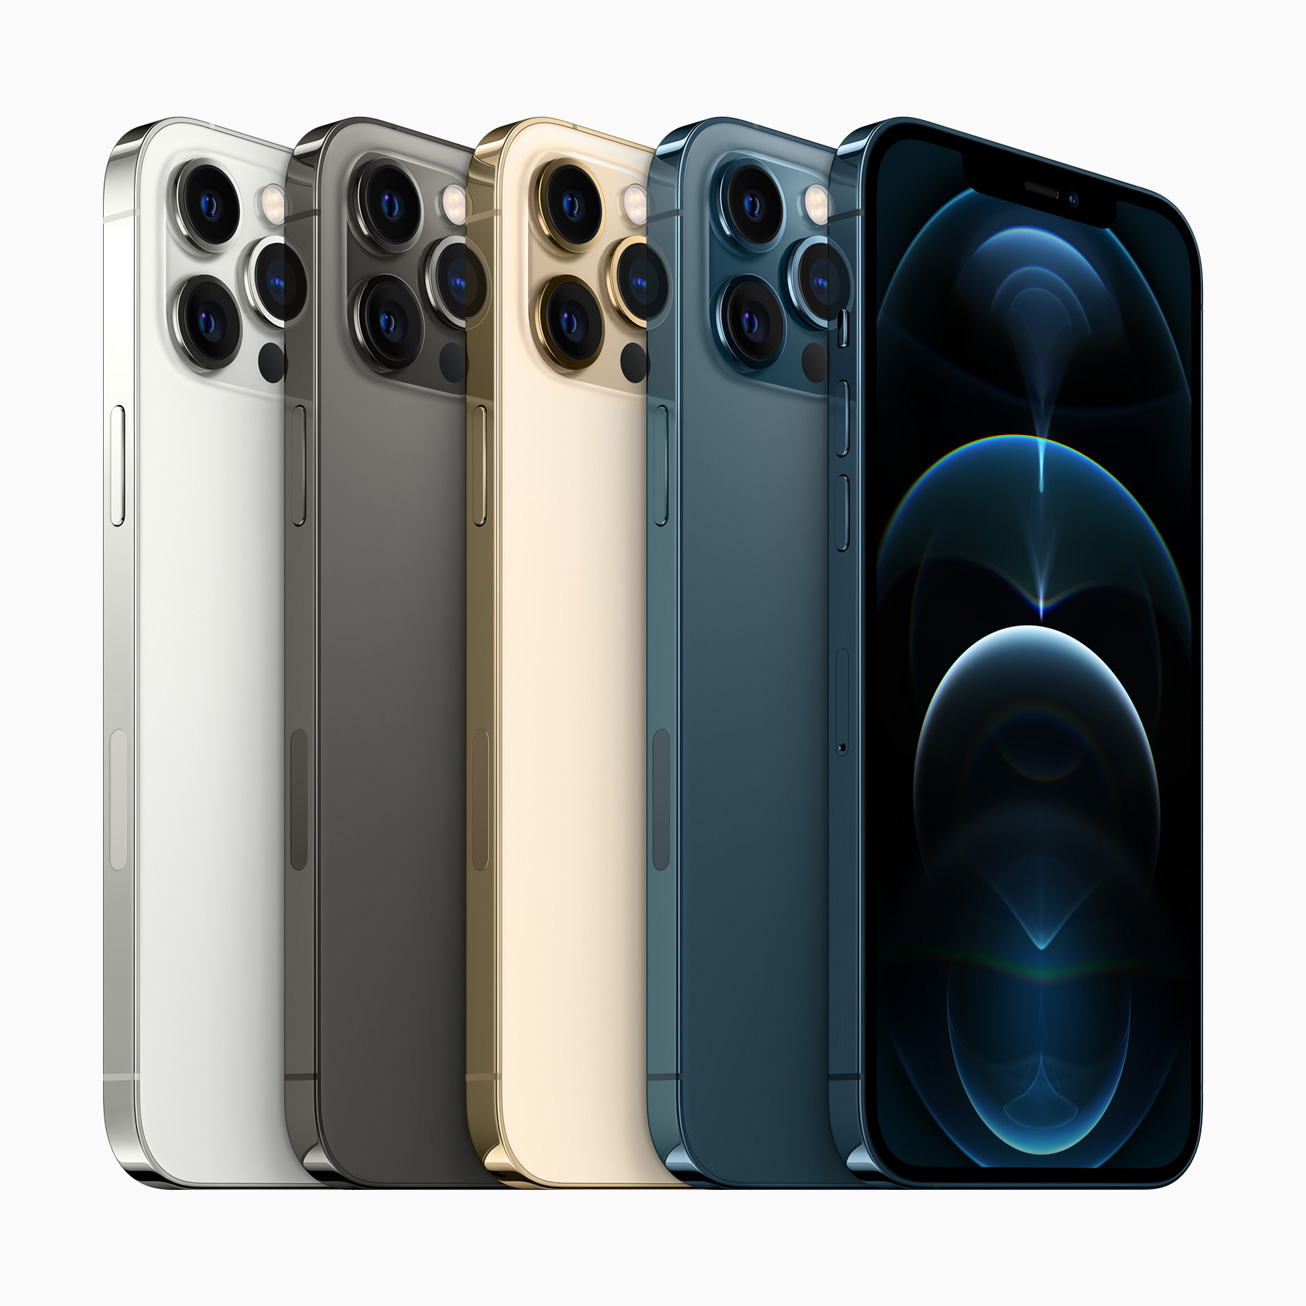 Thiết kế Apple iPhone 12-series